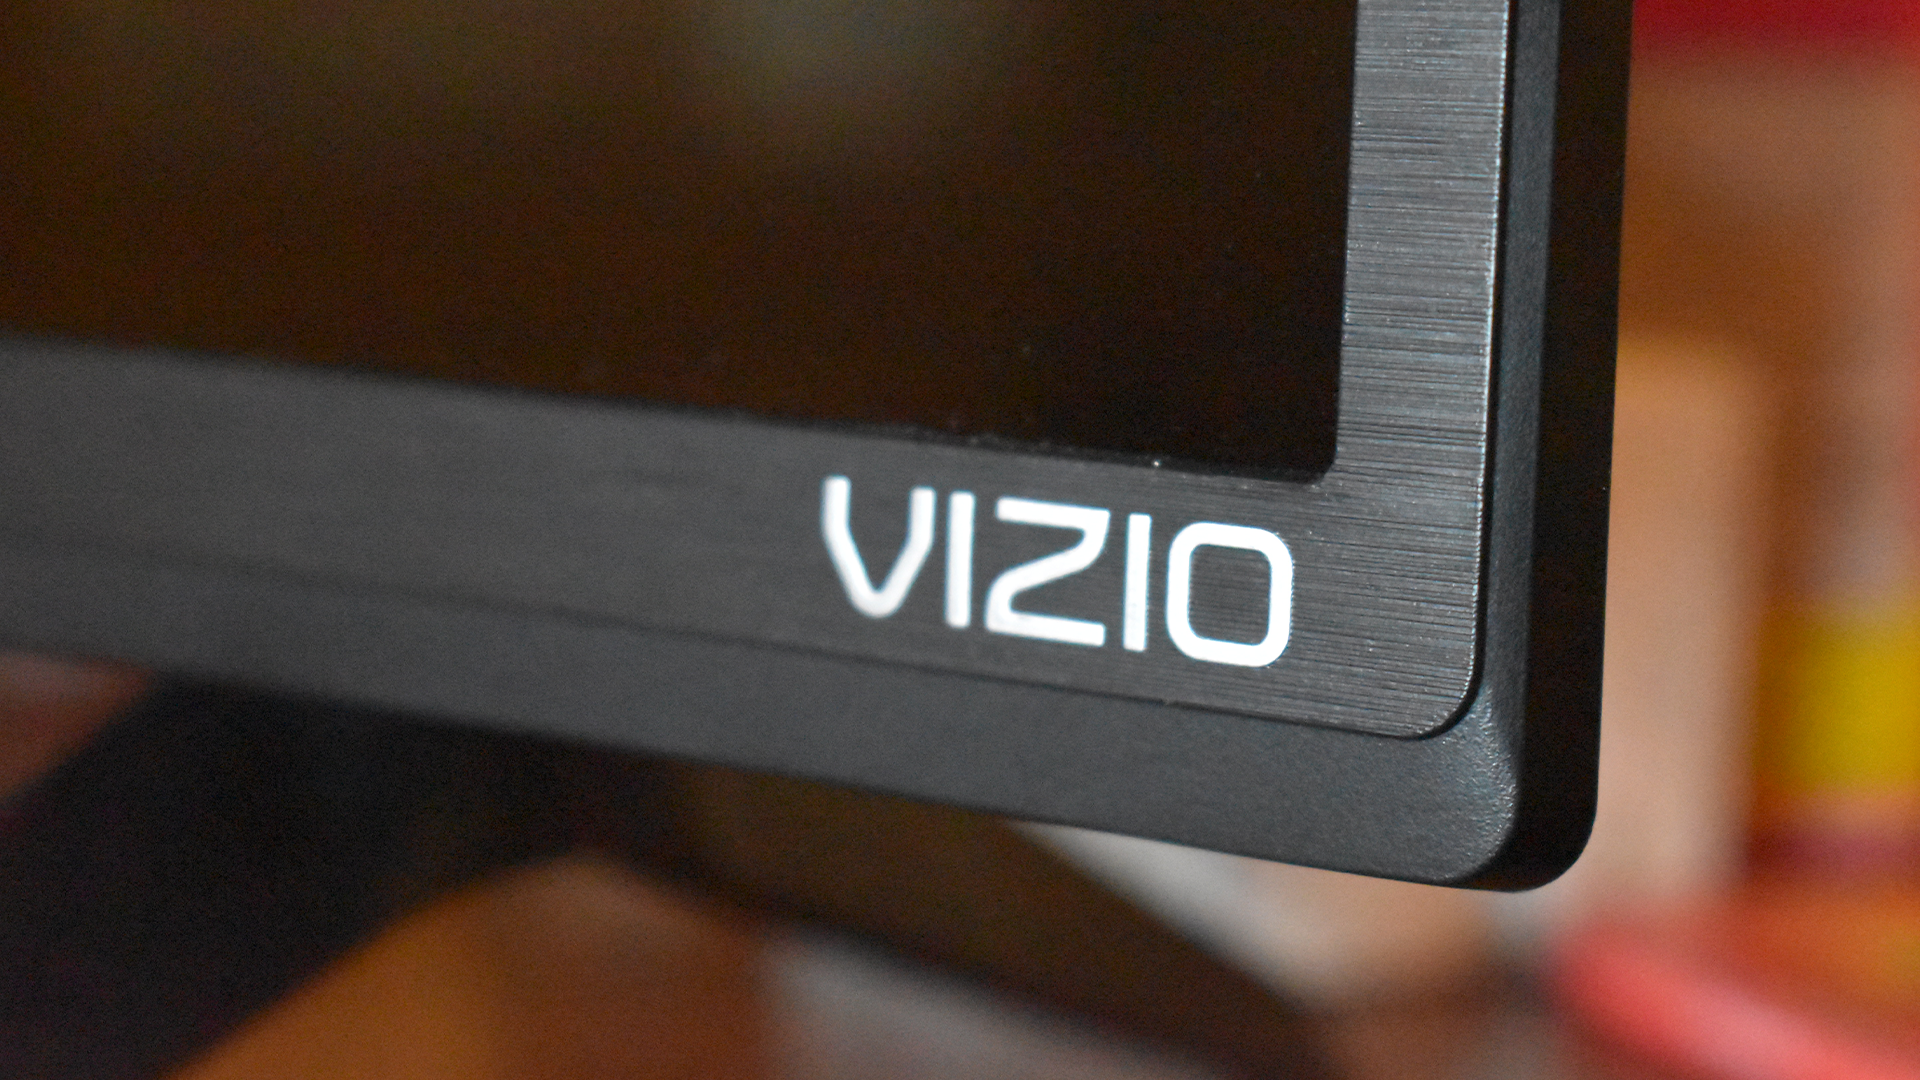 The Vizio TV's logo.